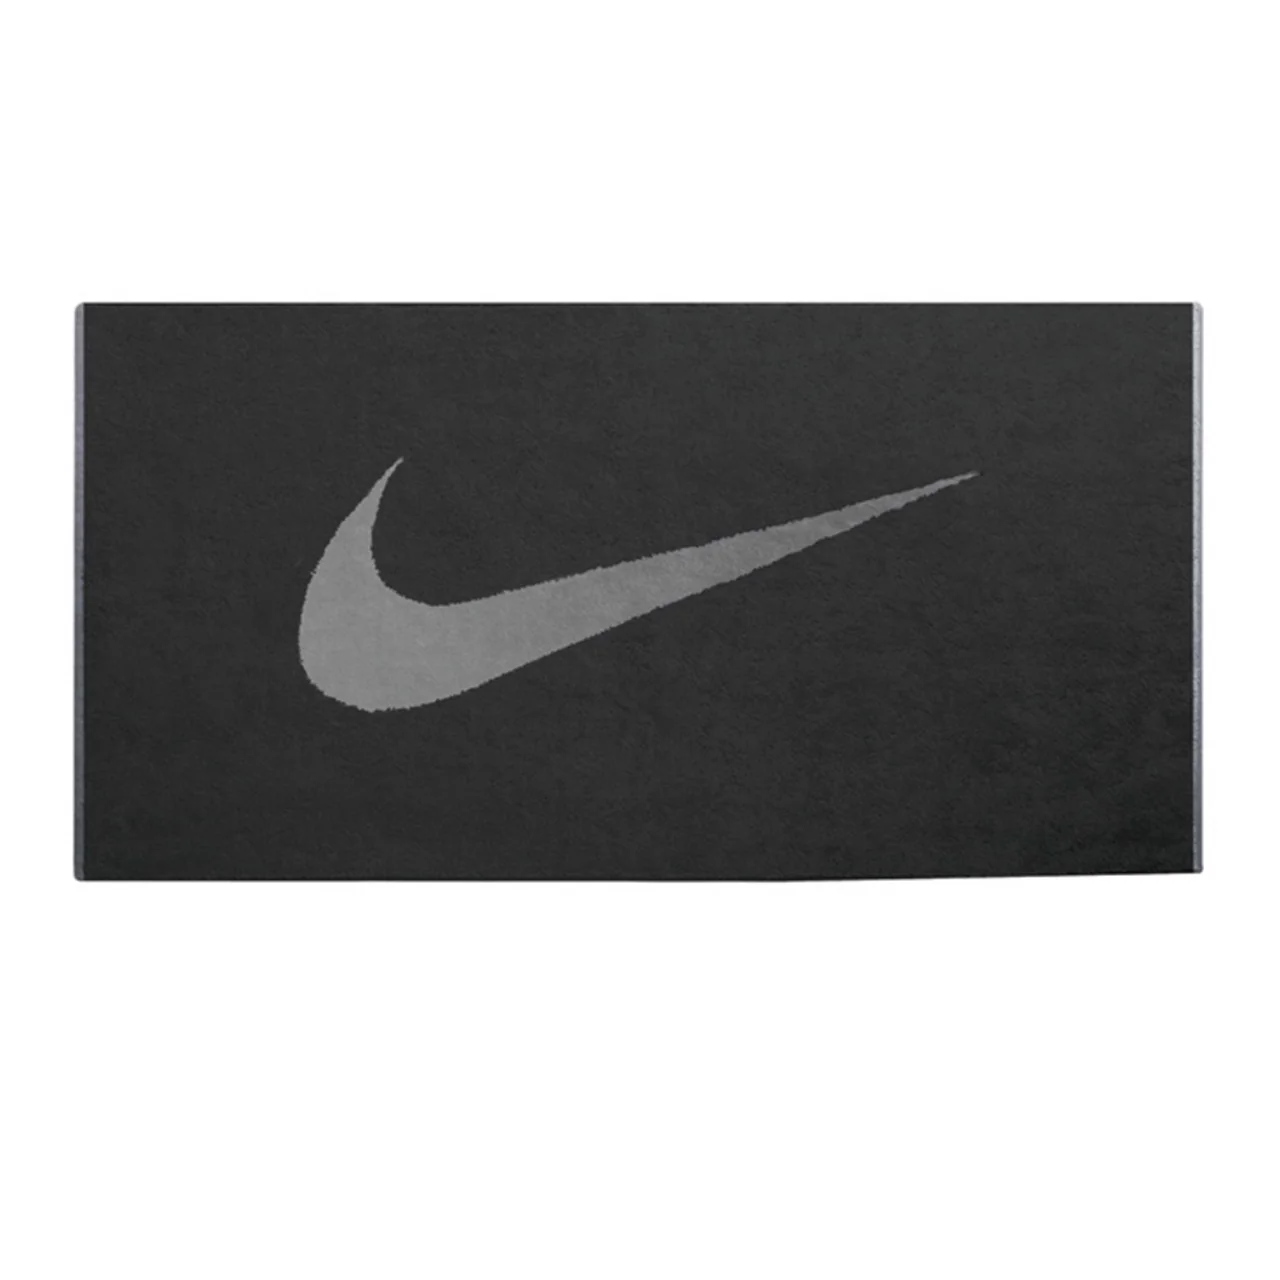 Nike Sport Towel Black